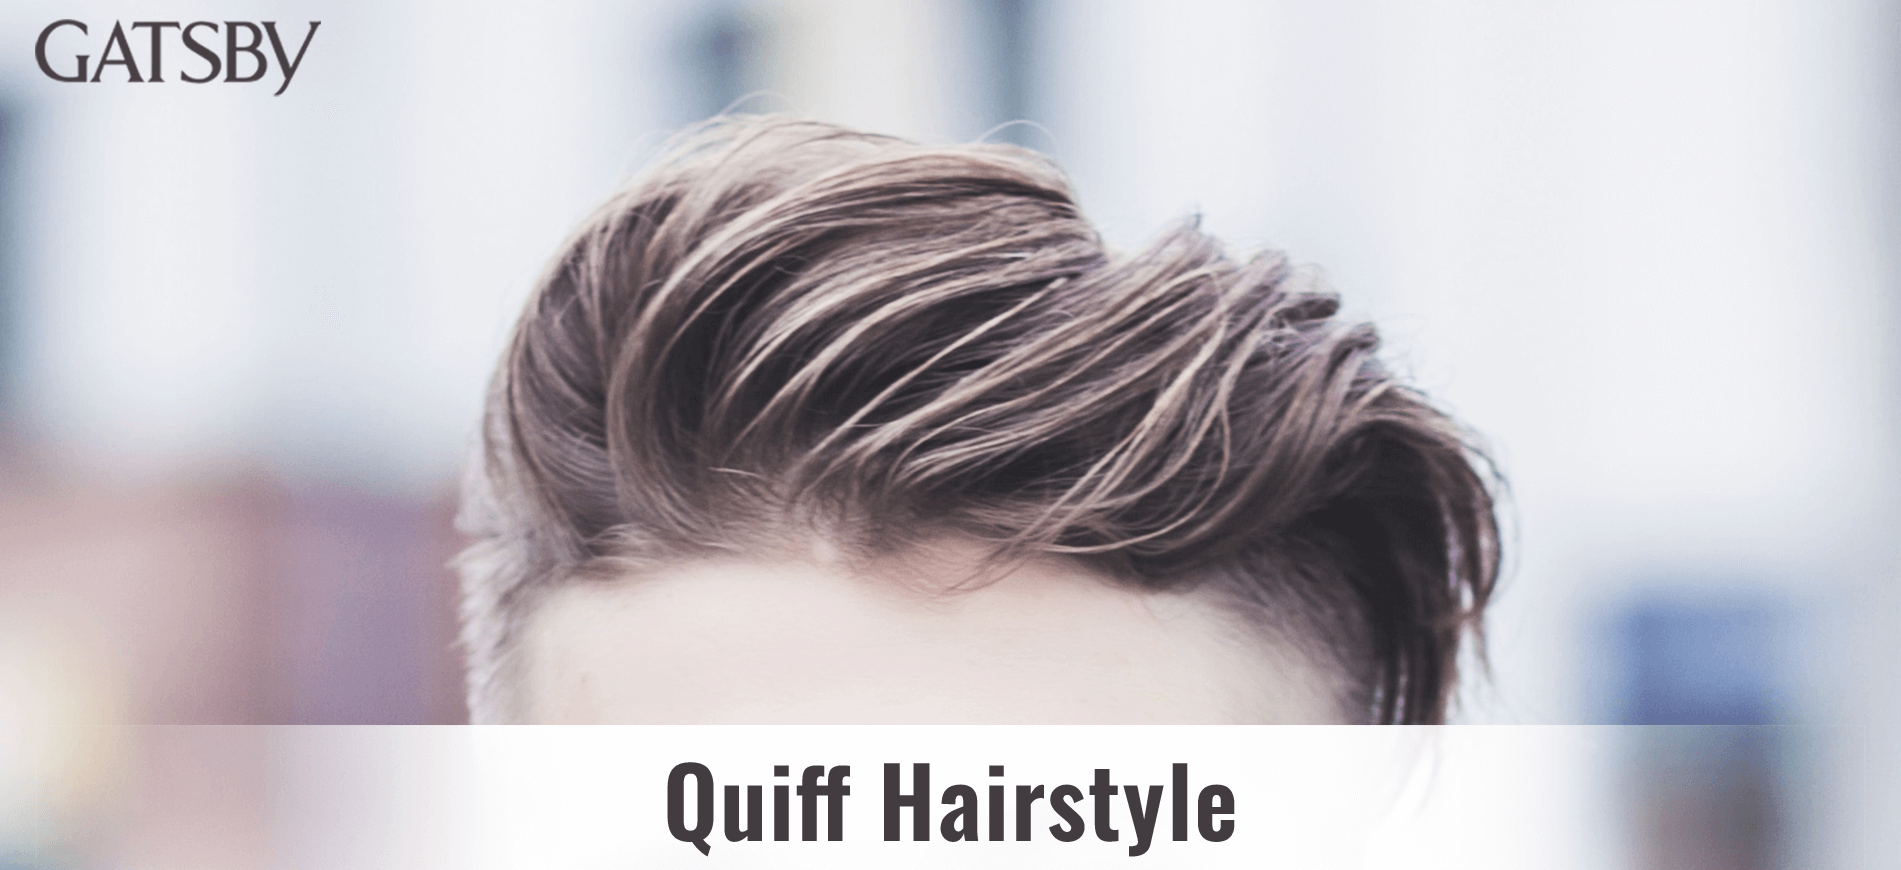 fashionbeans the quiff hairstyle